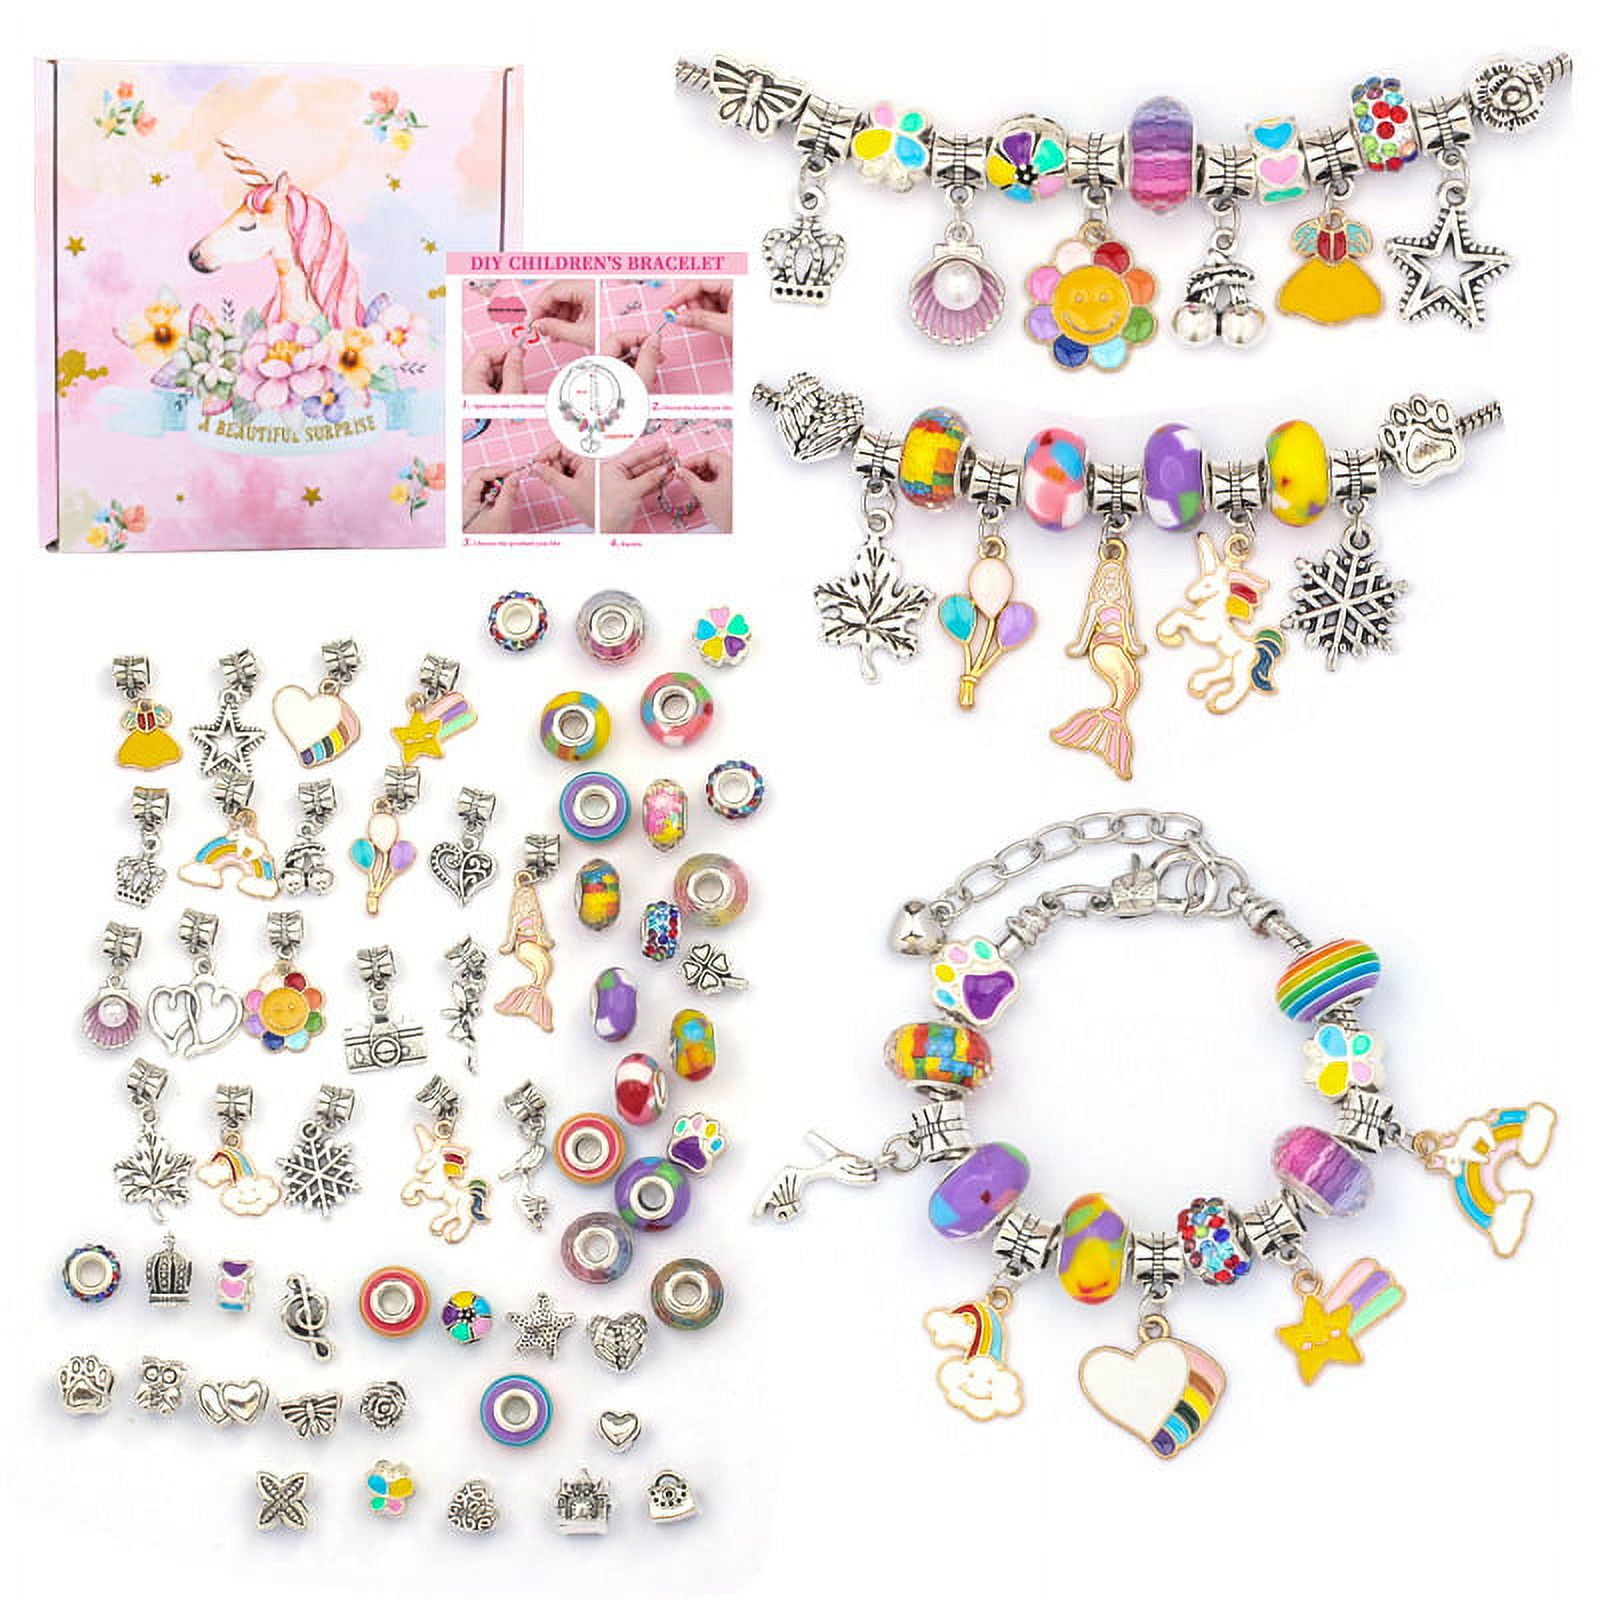 ZQFTZQ DIY Charm Bracelet making kit for girls,jewelry making kit Including  Jewelry Beads,Snake Chains,Bead Bracelet Kit Unicorn Mermaid Birthday